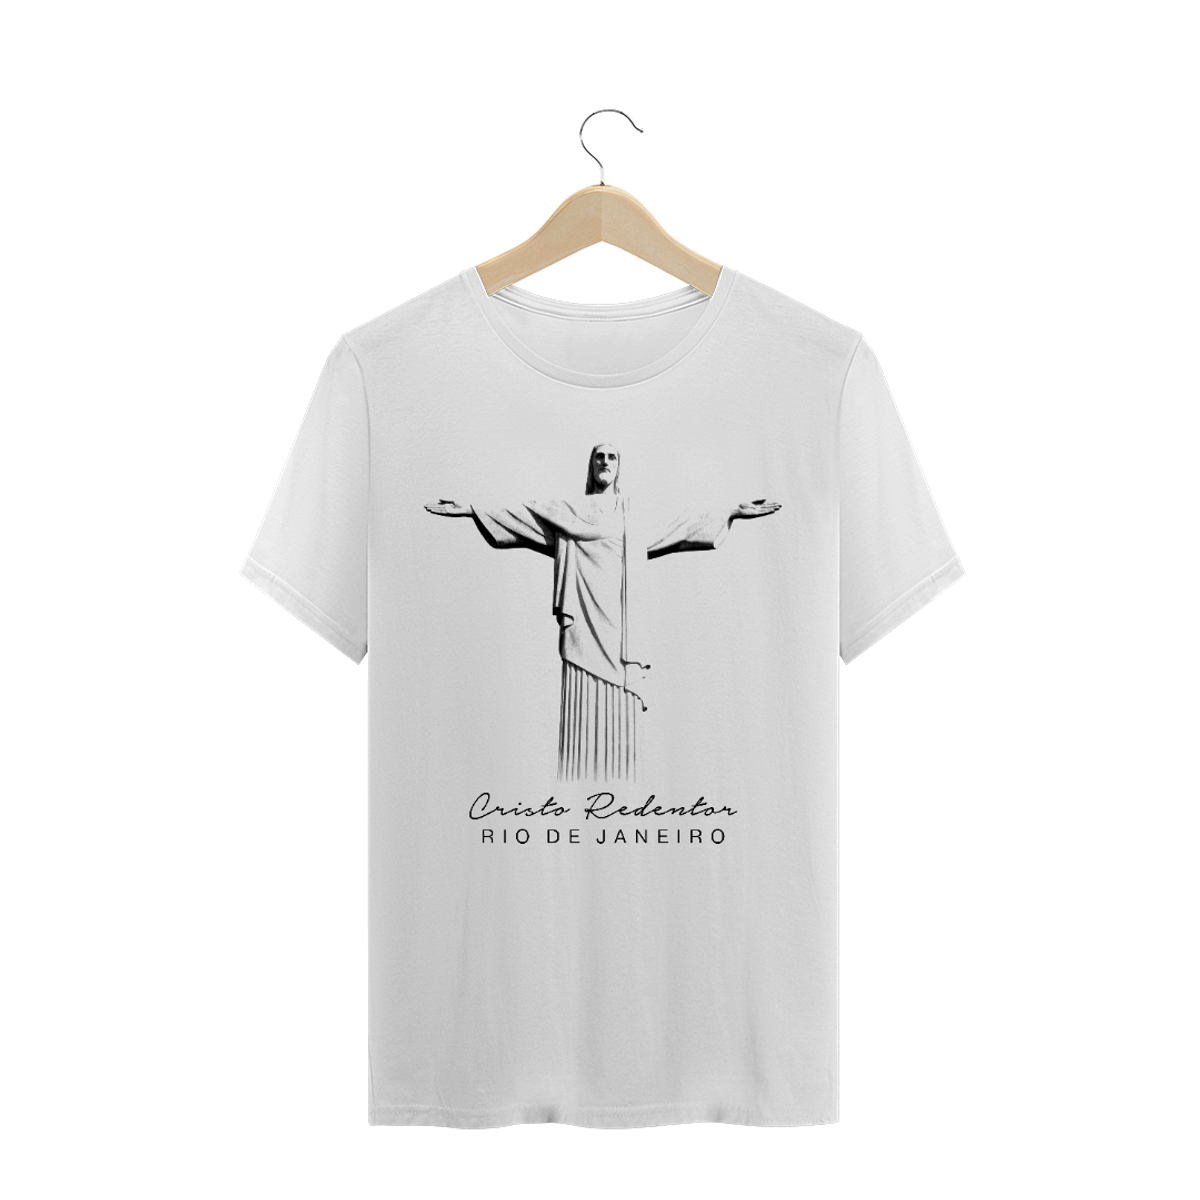 Nome do produto: Camiseta Masculina Cristo Redentor braços abertos